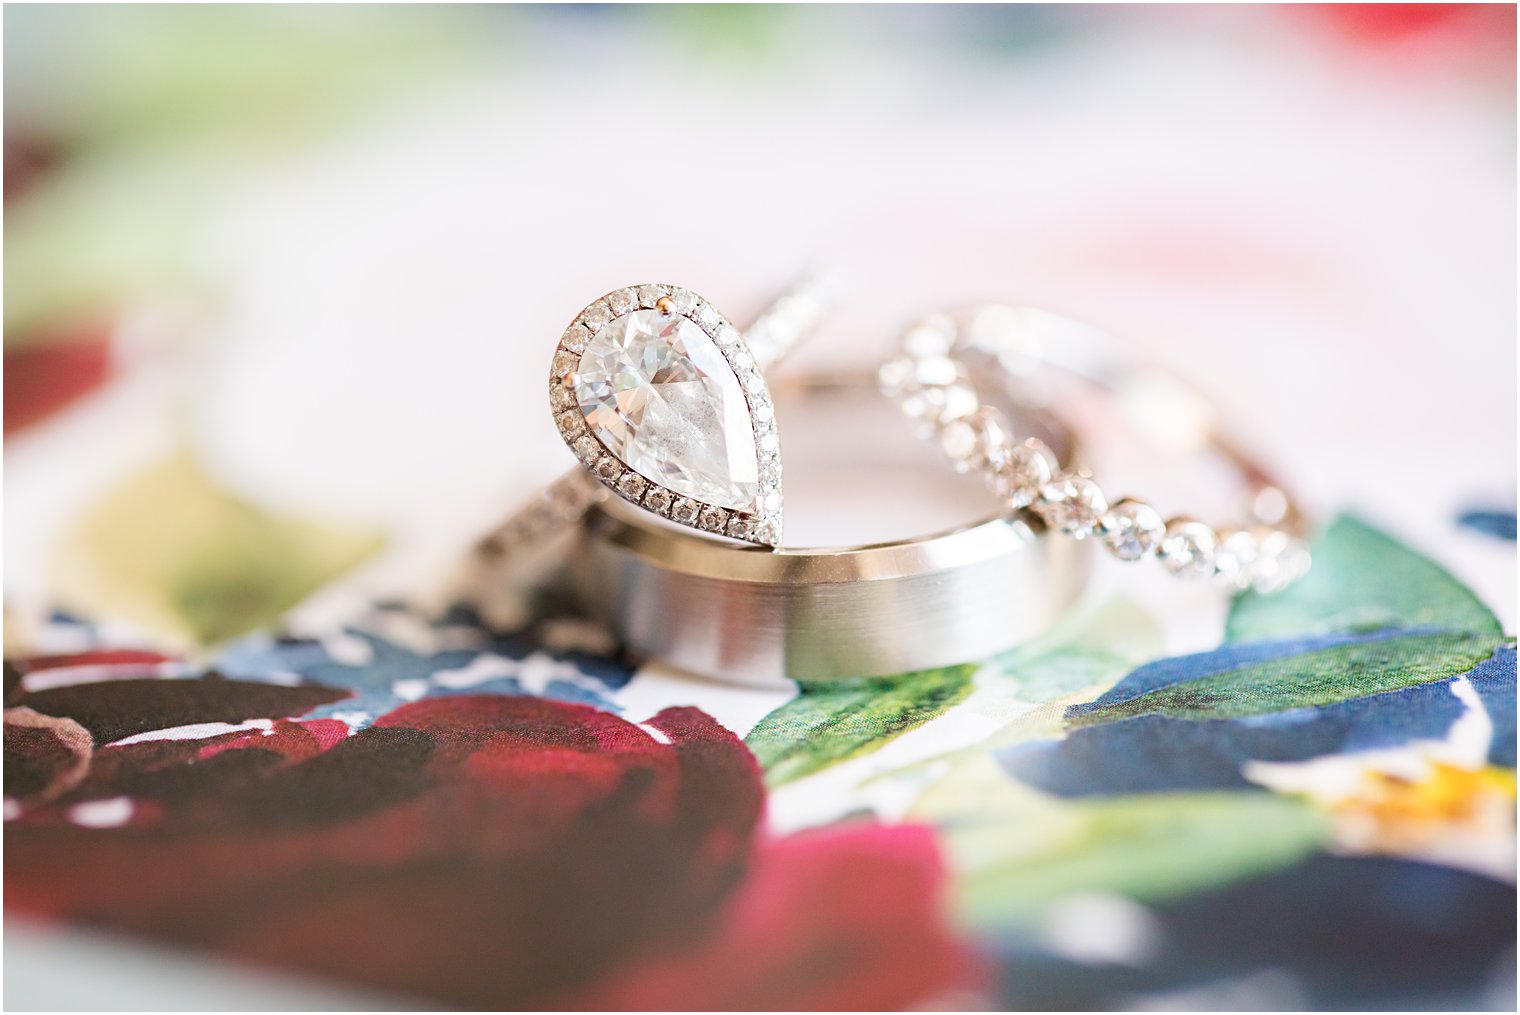 jewelry on wedding invitation photographed by Idalia Photography